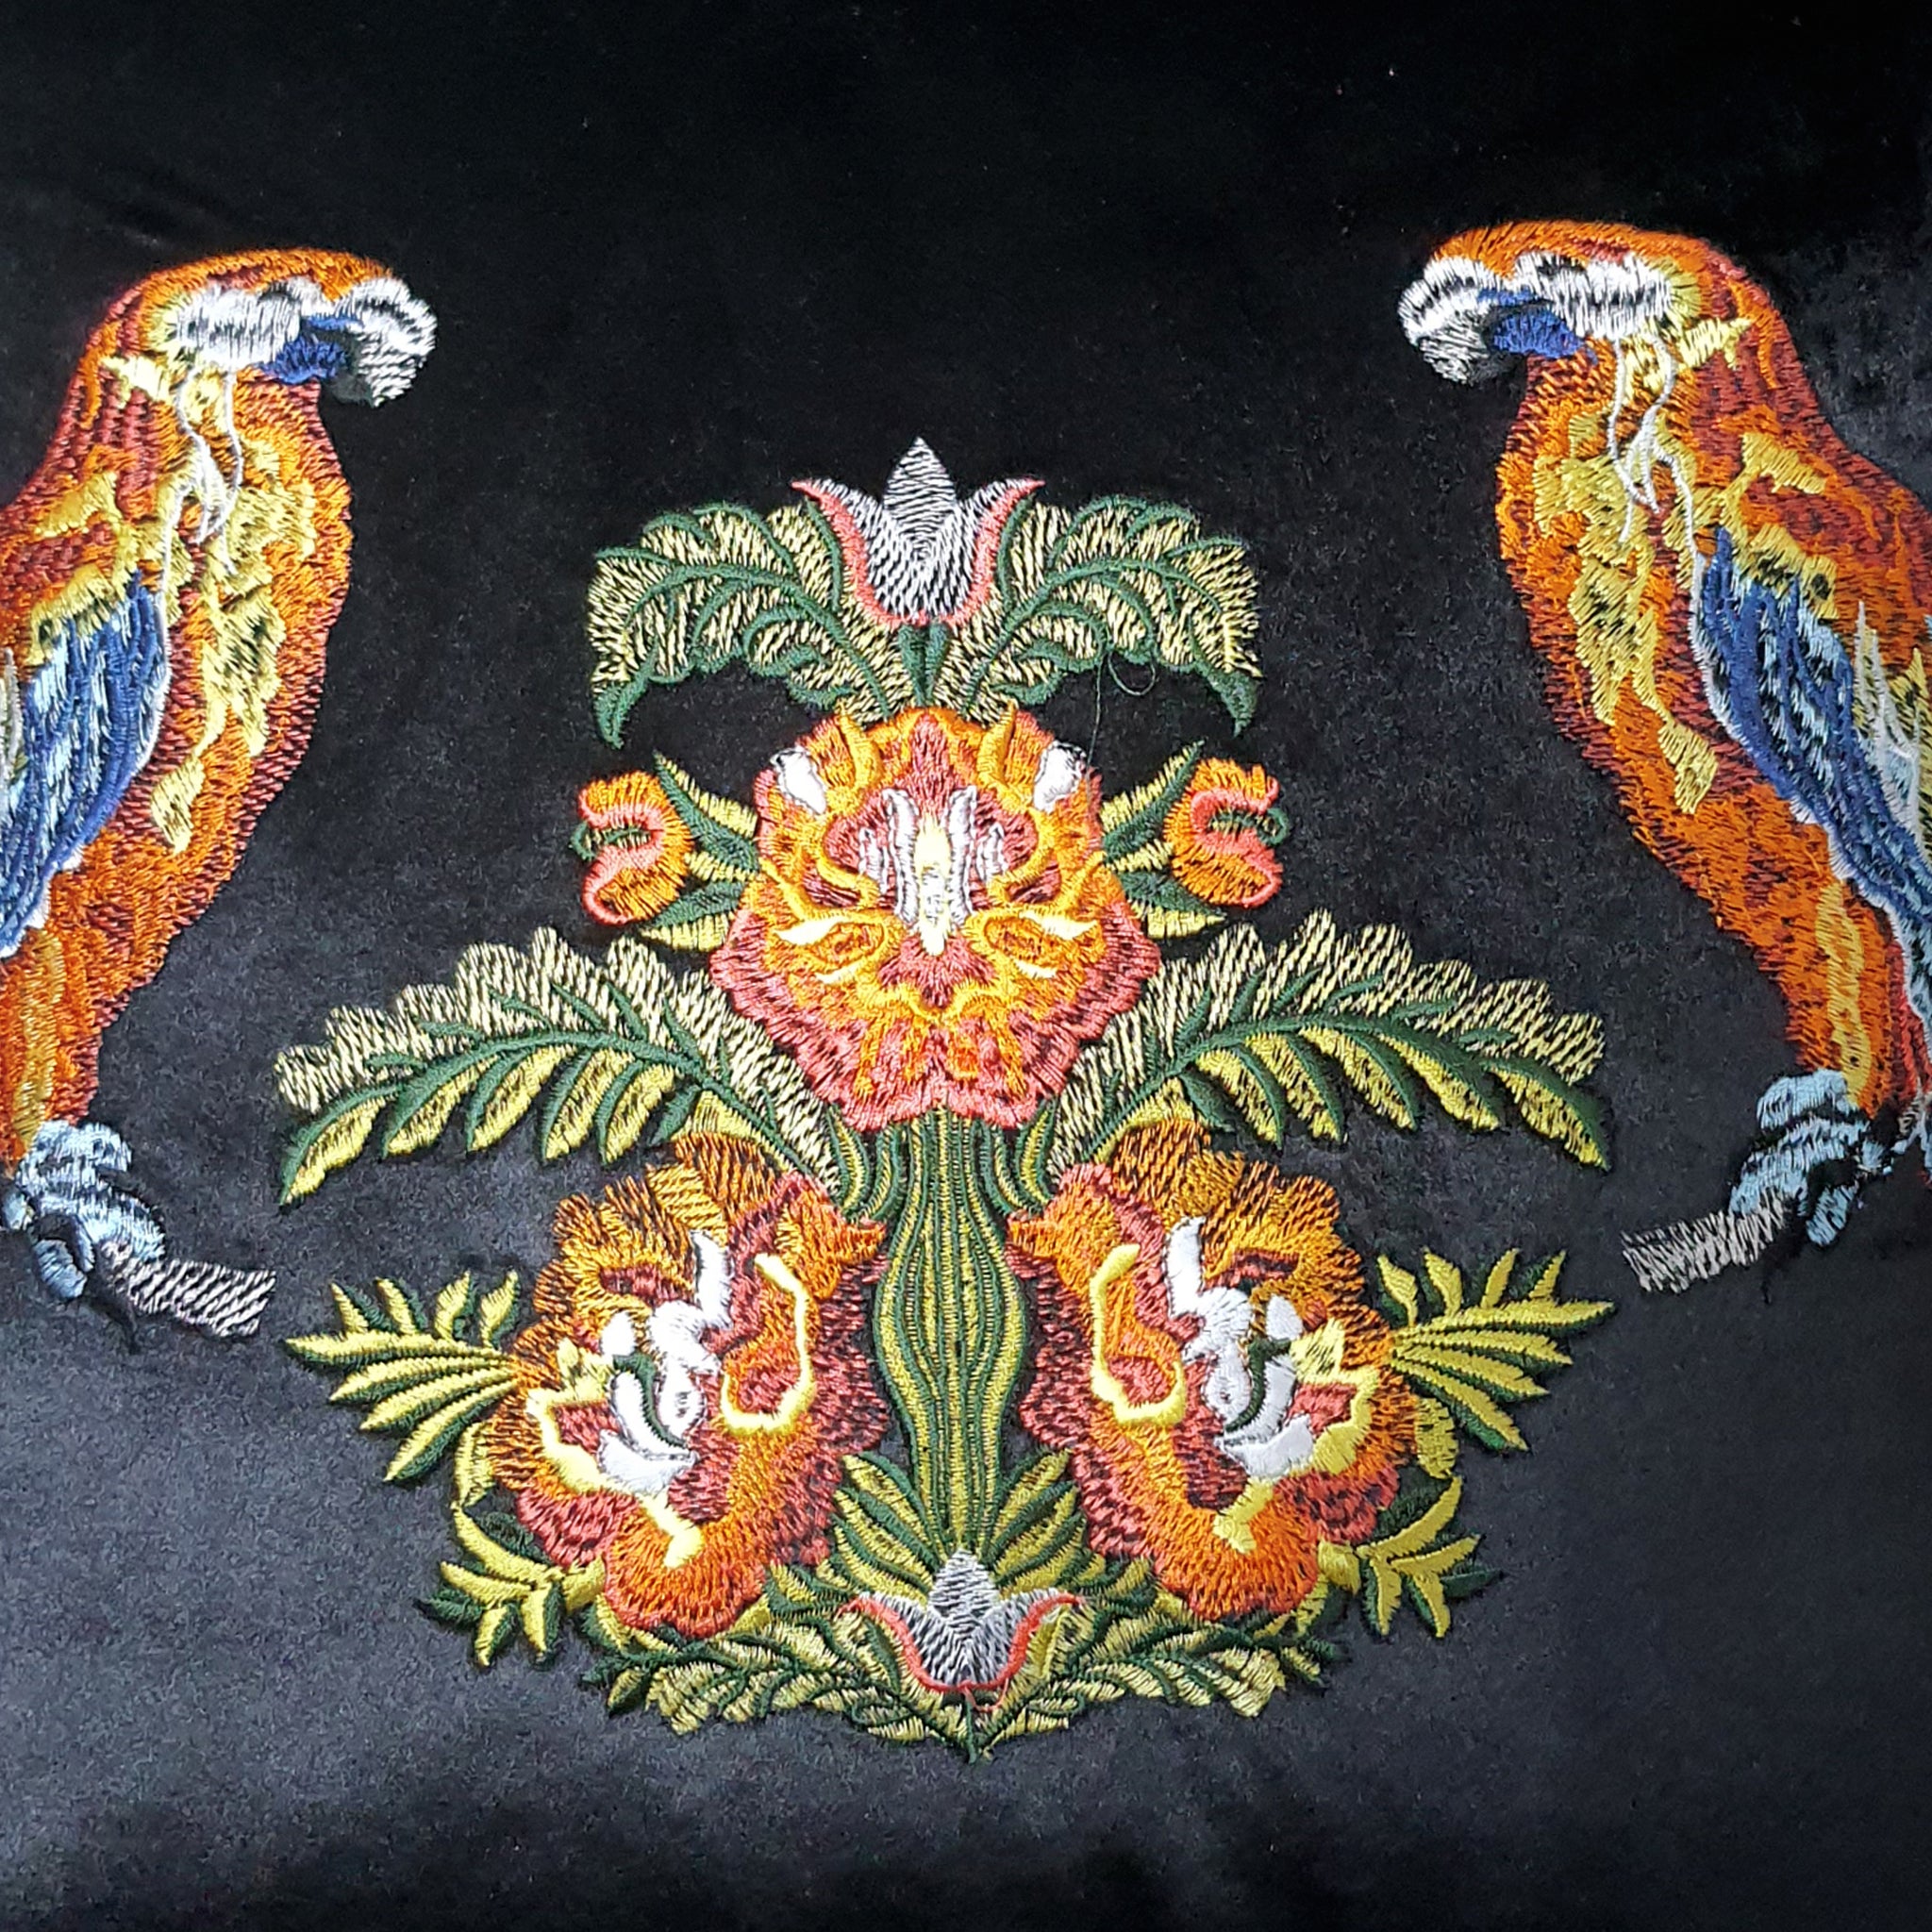  Velvet Cushion Cover Parrot Embroidery Decorative Pillowcase Modern Tropical Birds Home Decor Throw Pillow for Sofa Chair 45x45 cm 